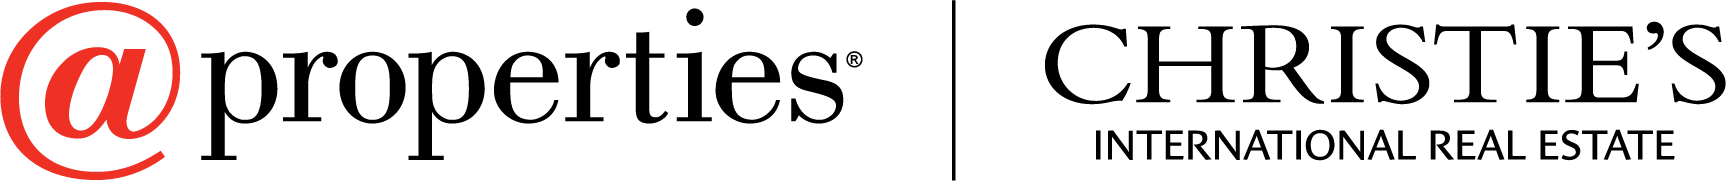 @Properties Christie's International Real Estate Black Logo (Horizontal)